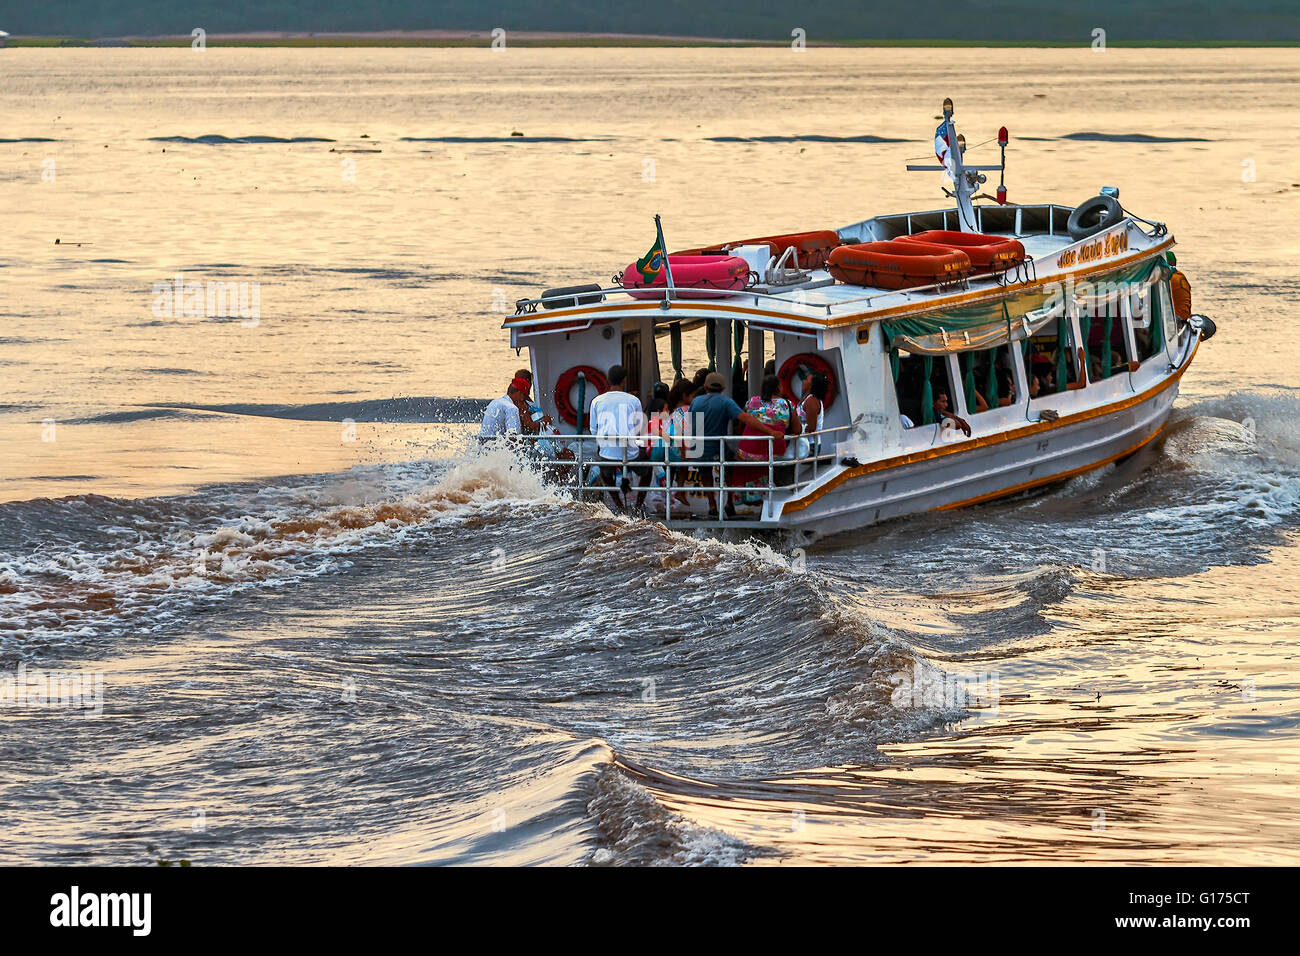 Amazon River Ferry fangen große Wellen Manaus Brasilien Stockfotografie -  Alamy